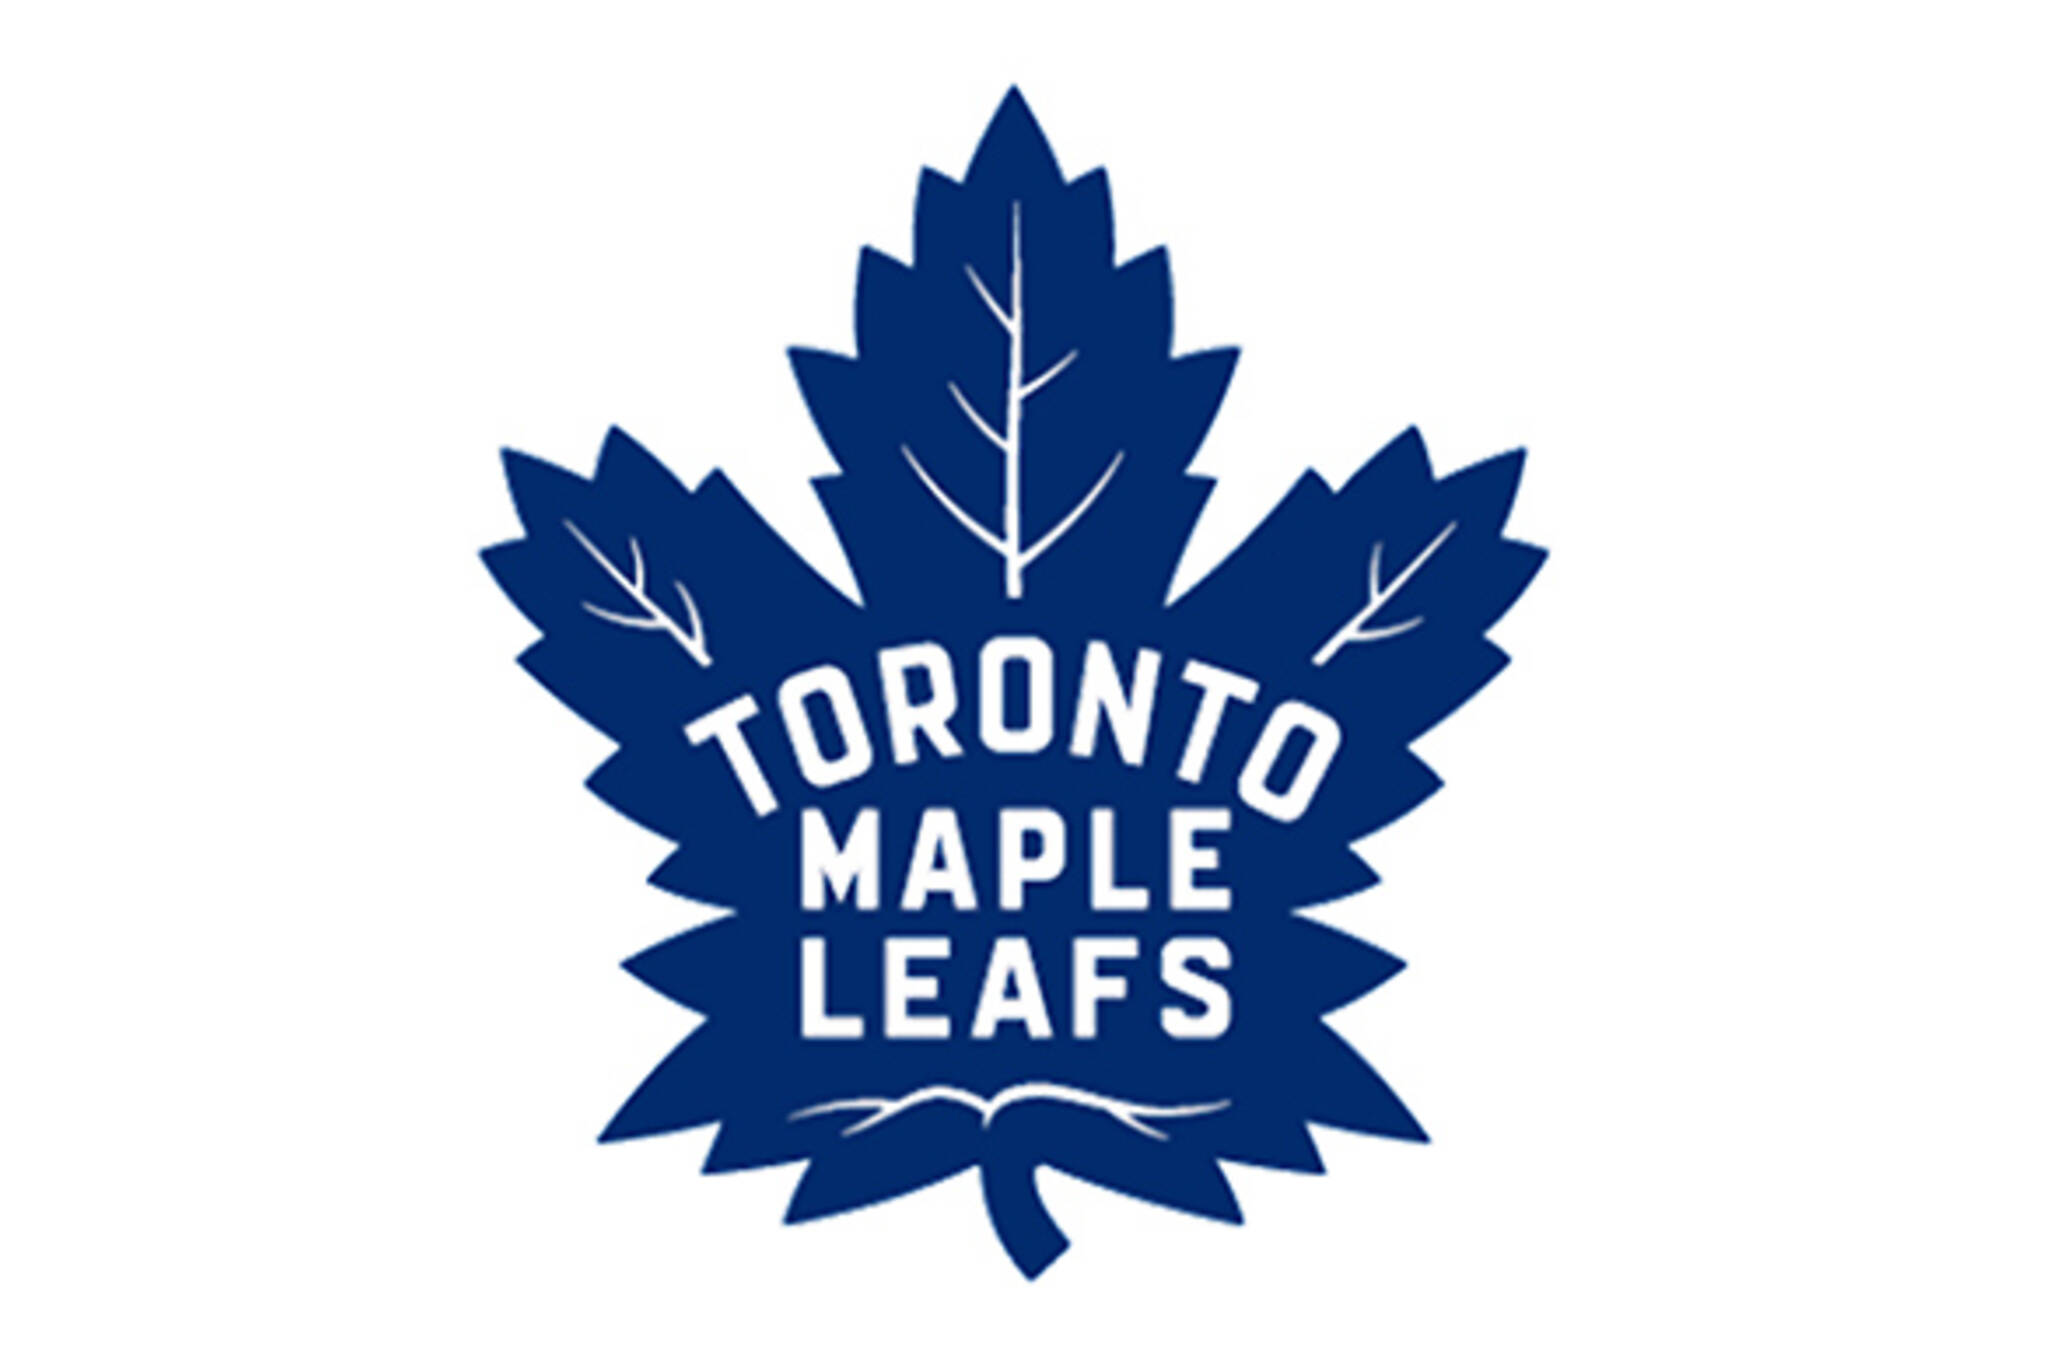 New Toronto Maple Leafs logo